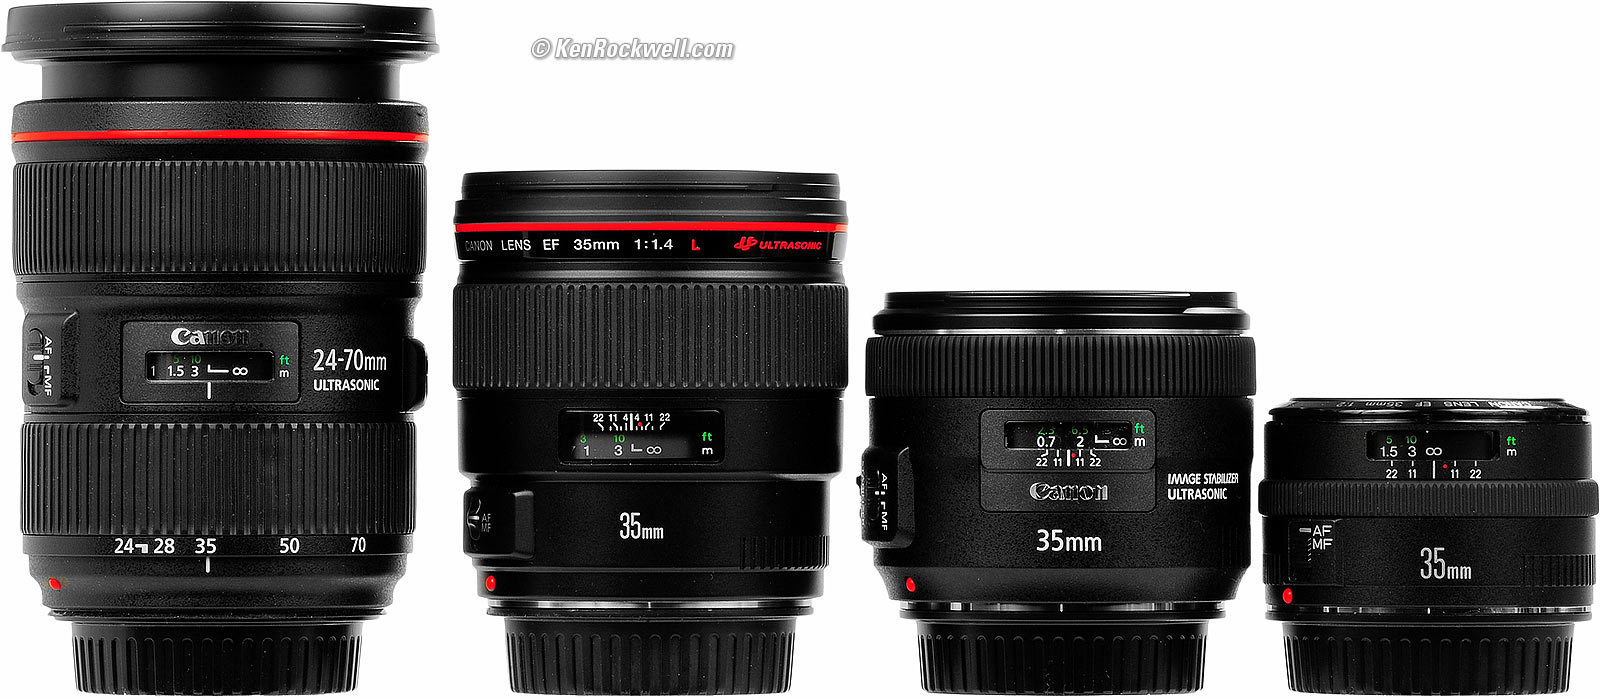 Canon EF 35mm F/1.4 1.4 L USM lens Diaphragm Aperture Parts YG2-0354 MK1 